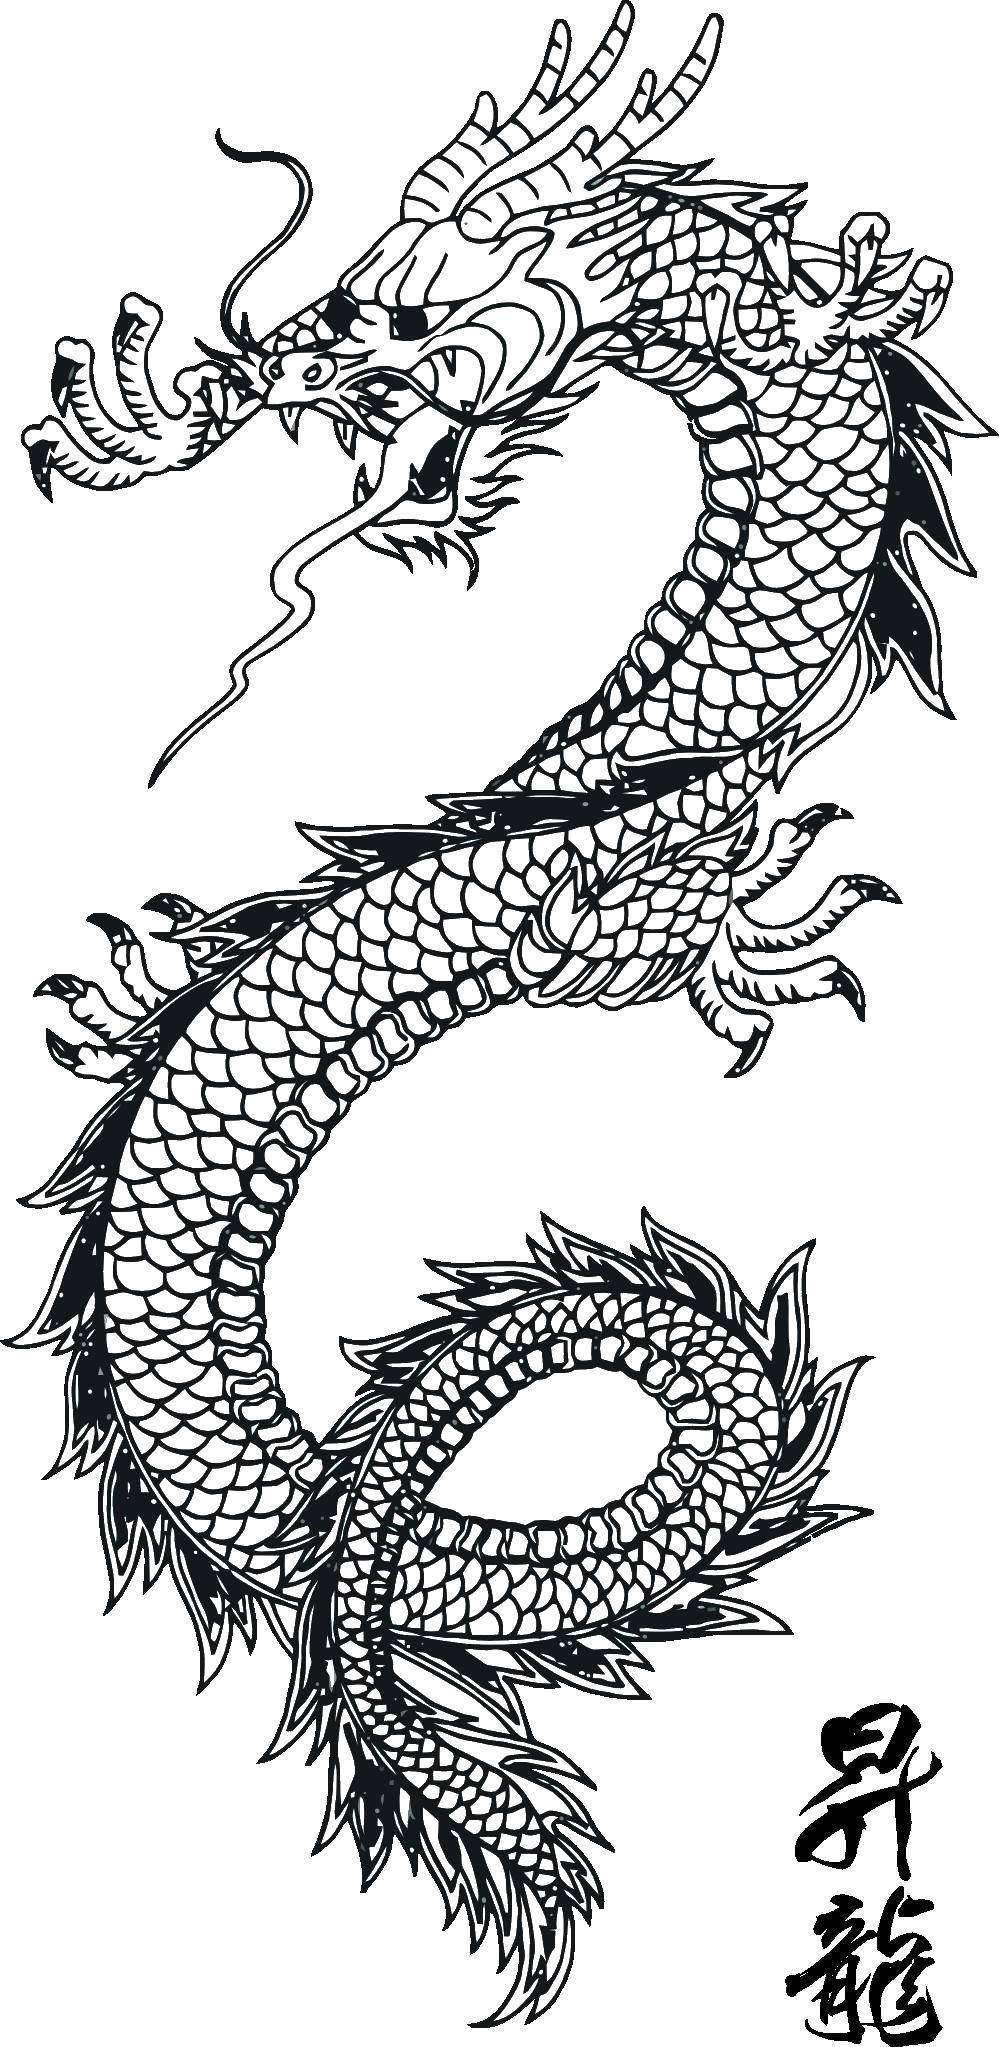 Coloring Ferocious dragon. Category Dragons. Tags:  dragon, China.